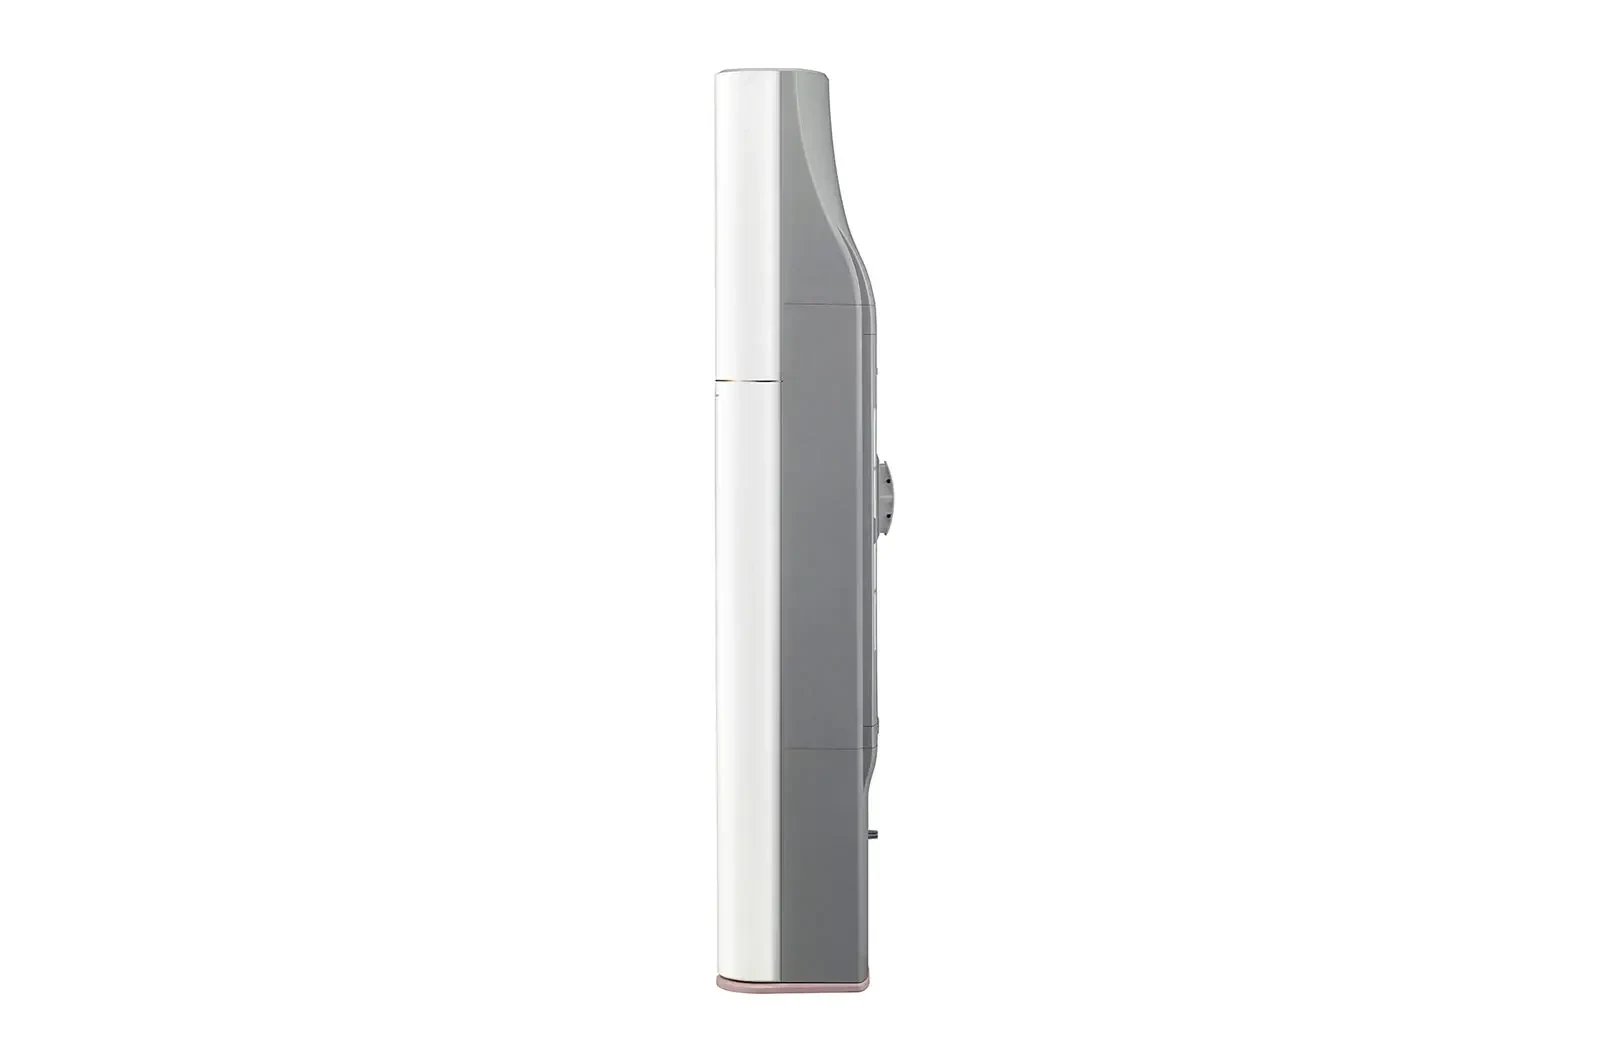 LG DUALCOOL Premium White AC, 2.5HP, SmartThinQ, Smart Diagnosis, Dual Inverter Compressor